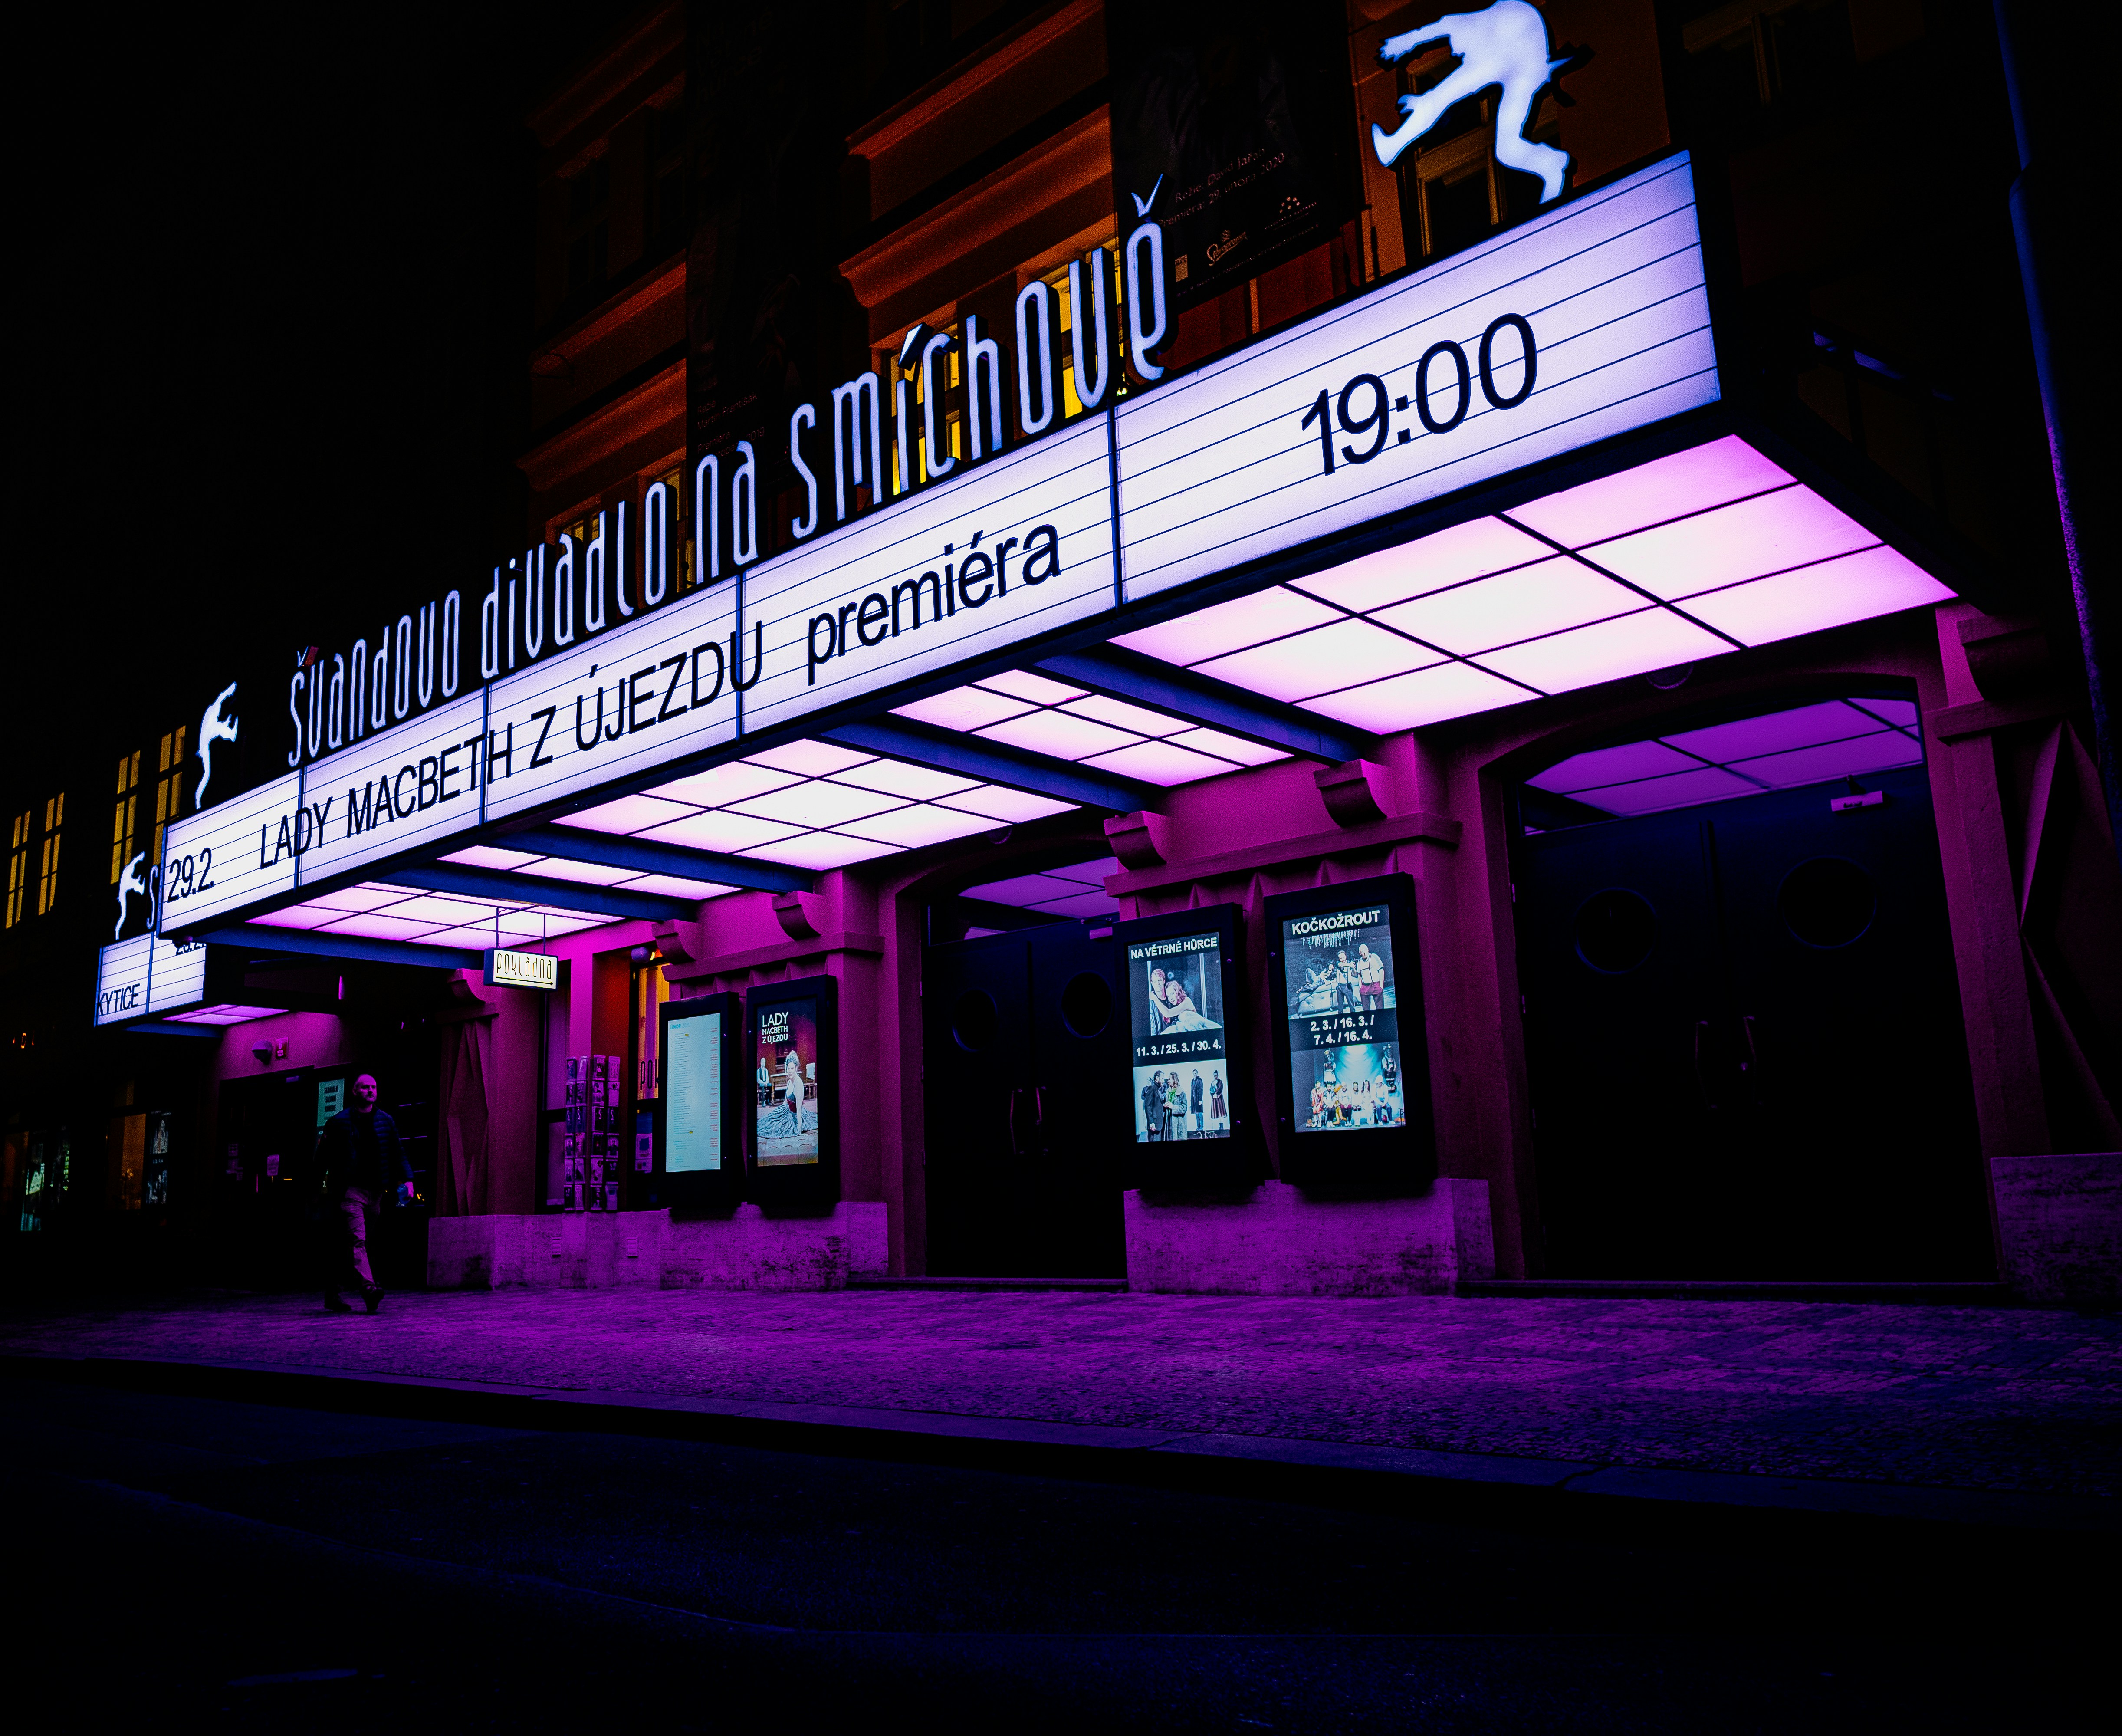 Švanda Theater in Smíchov Prague.